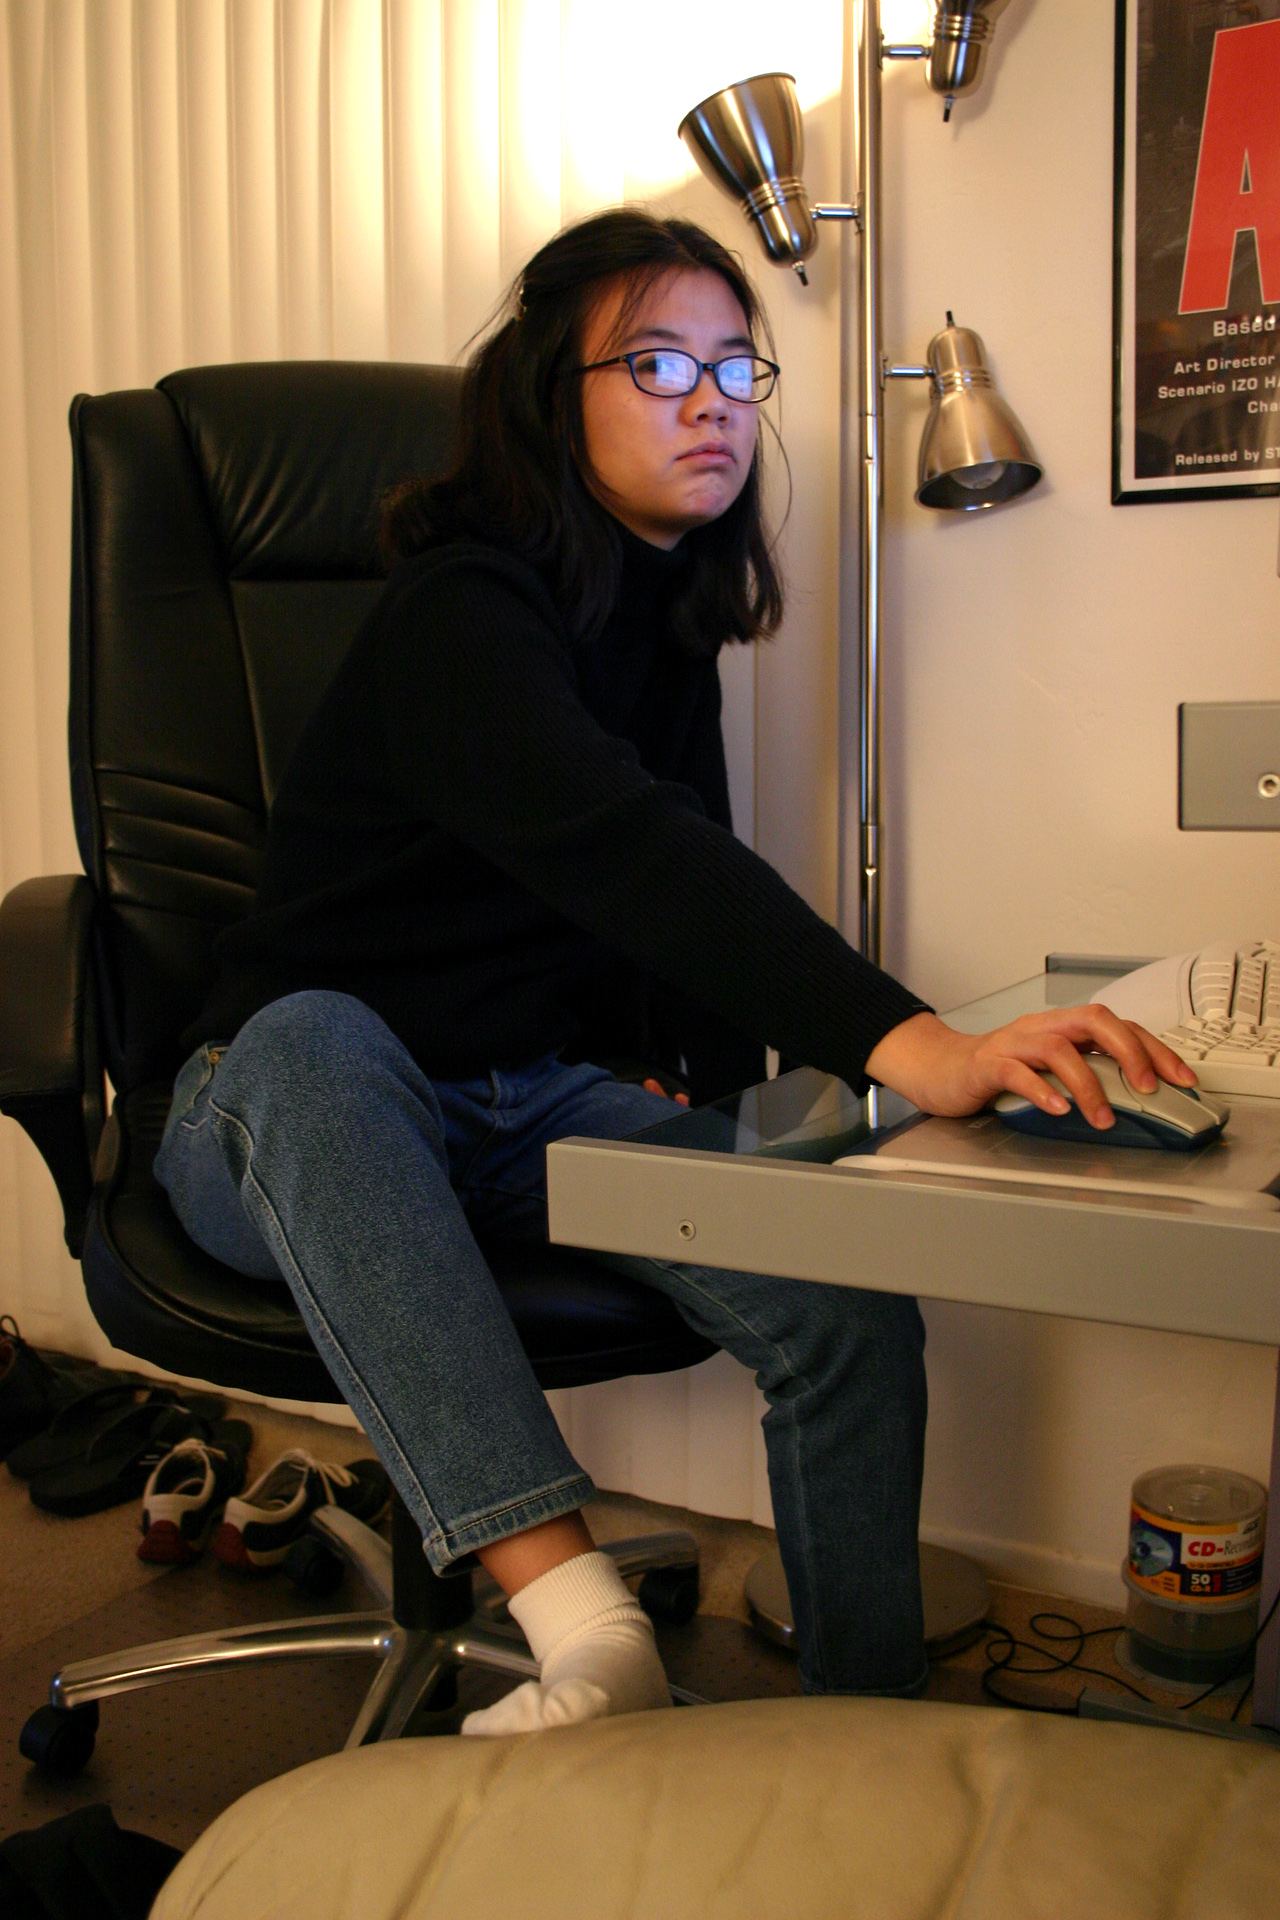 Tina at the computer